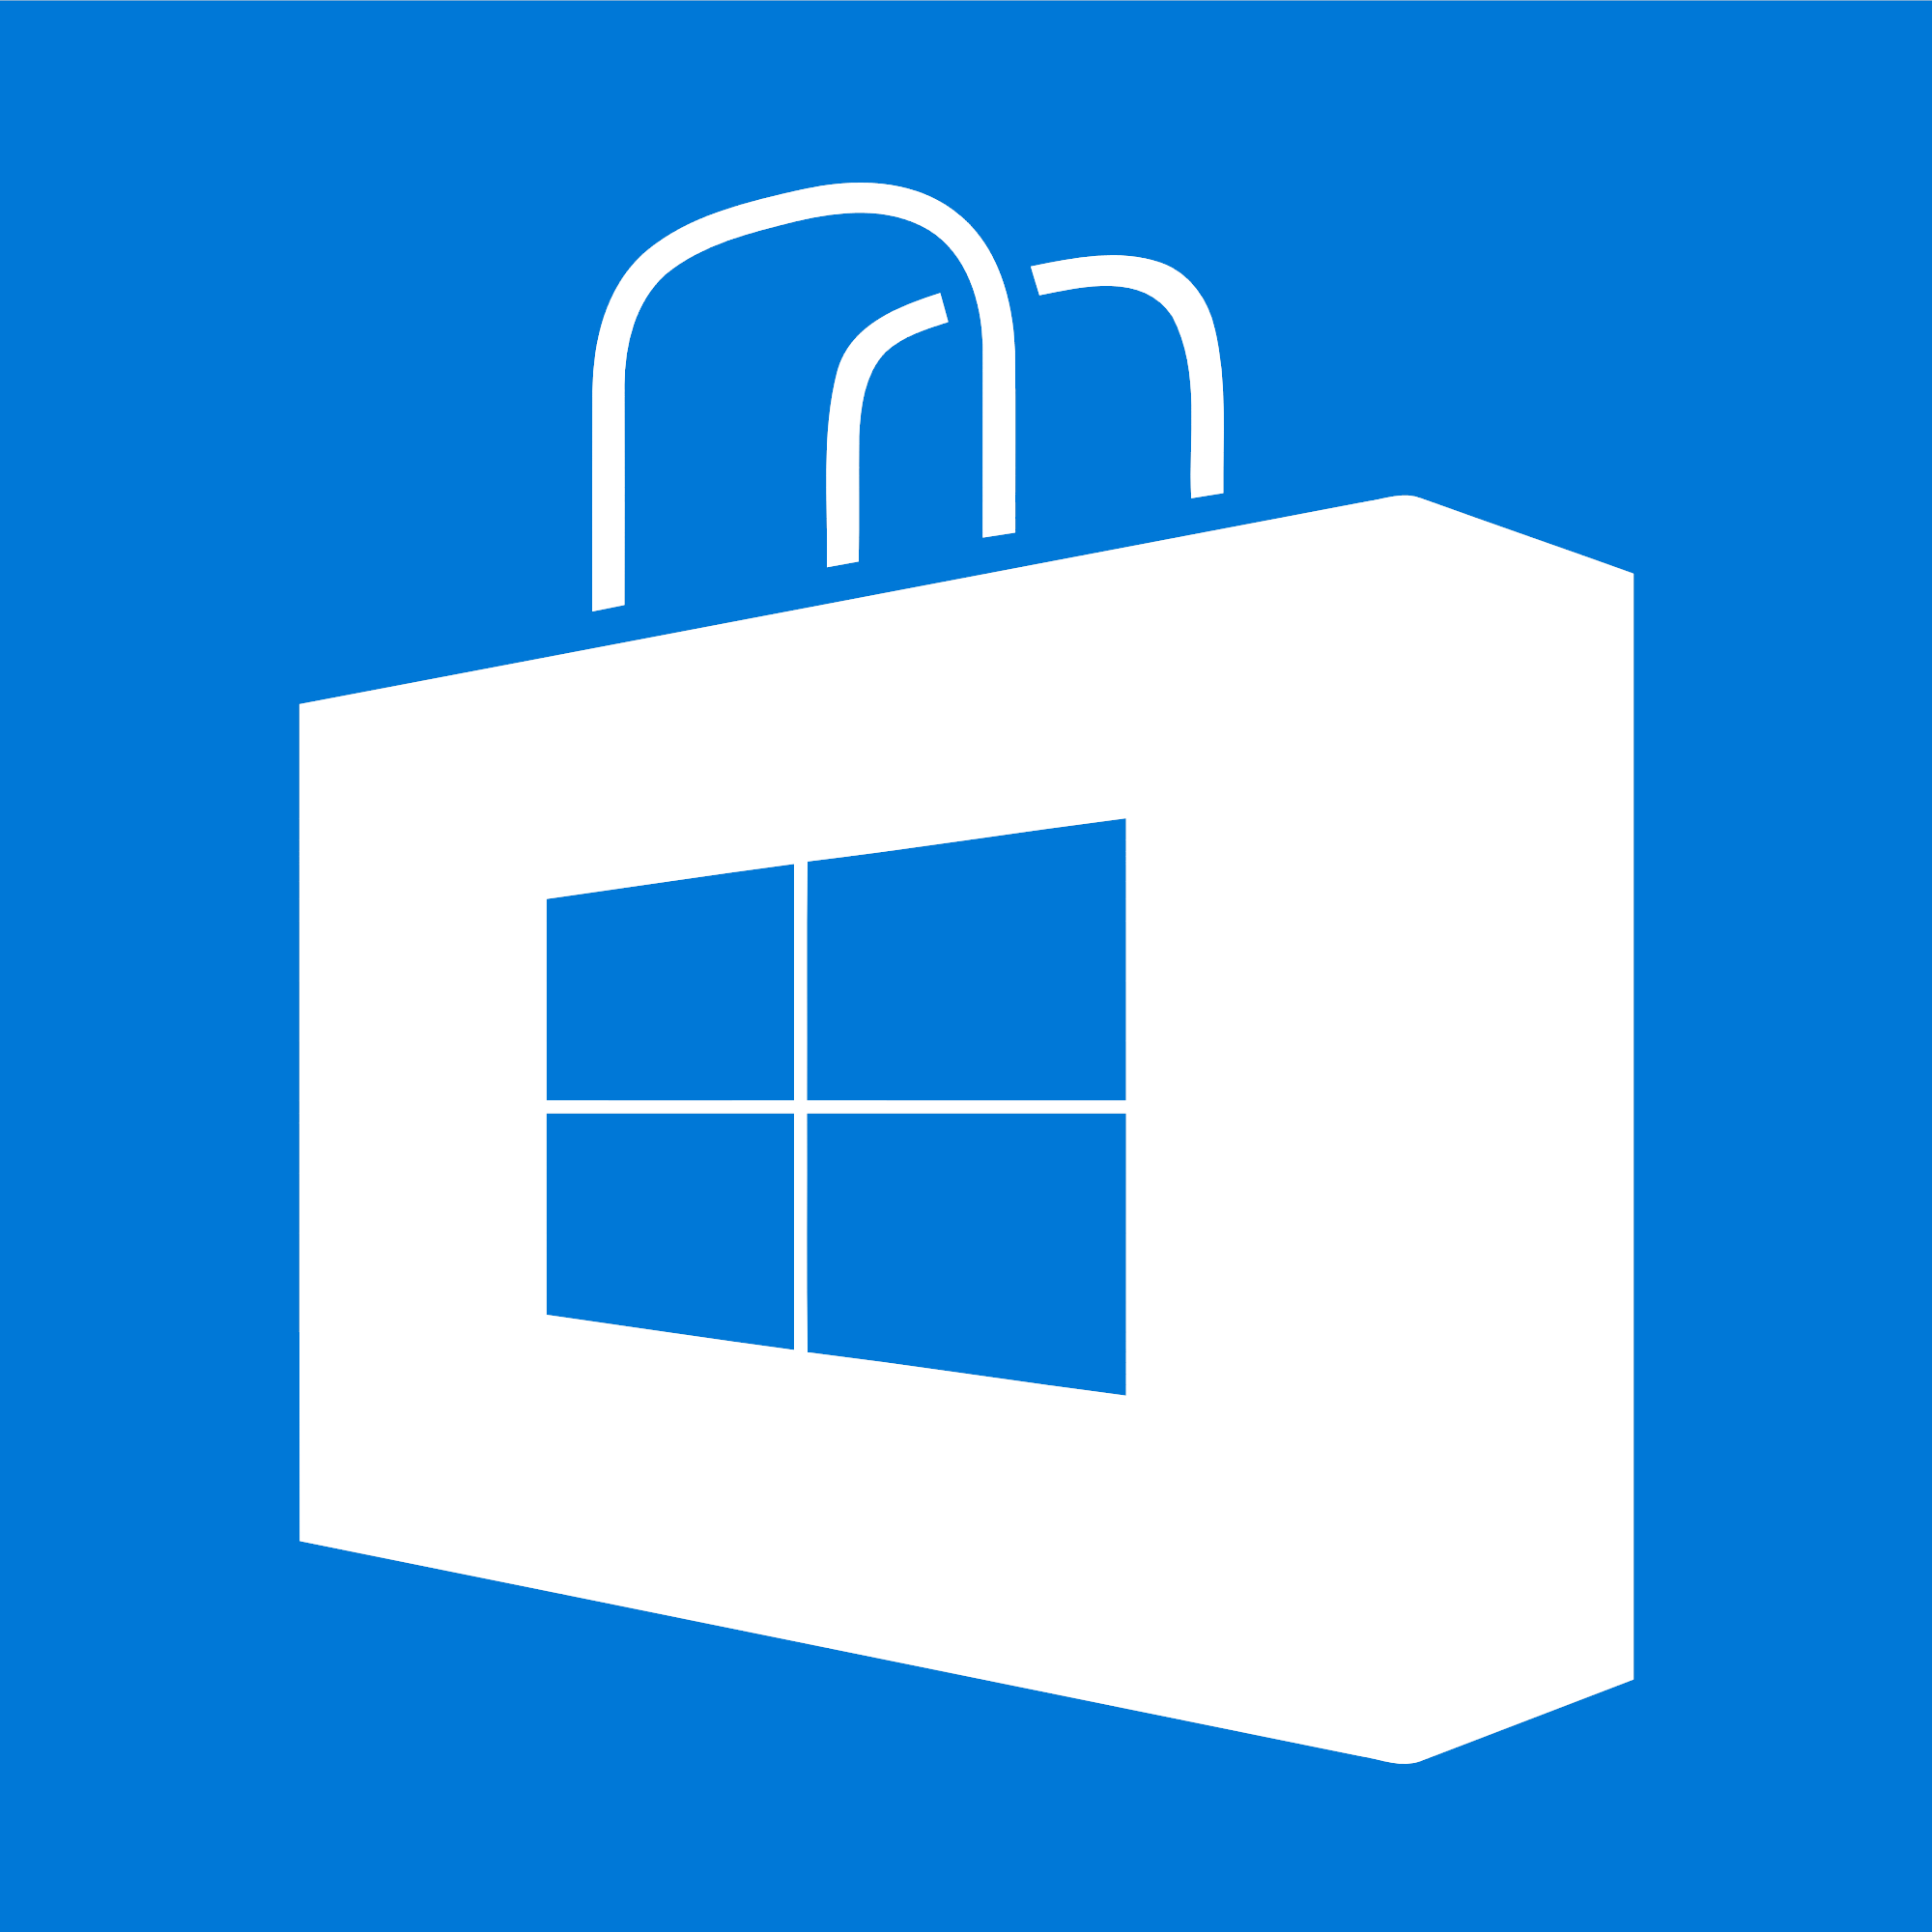 Windows Store logo, logotype